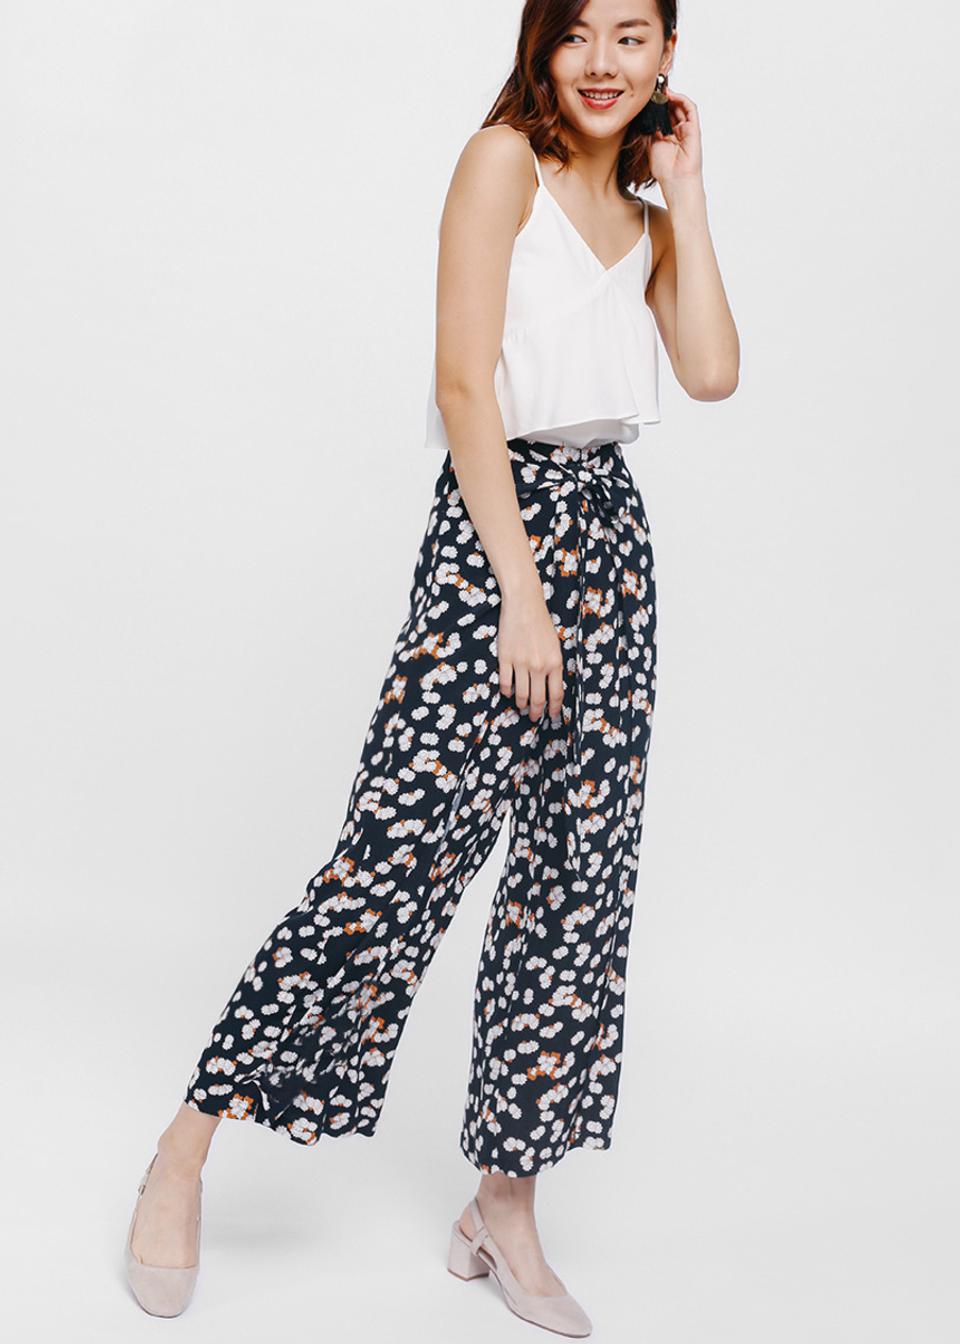 Buy Casya Printed Foldover Pants @ Love, Bonito Singapore | Shop Women ...